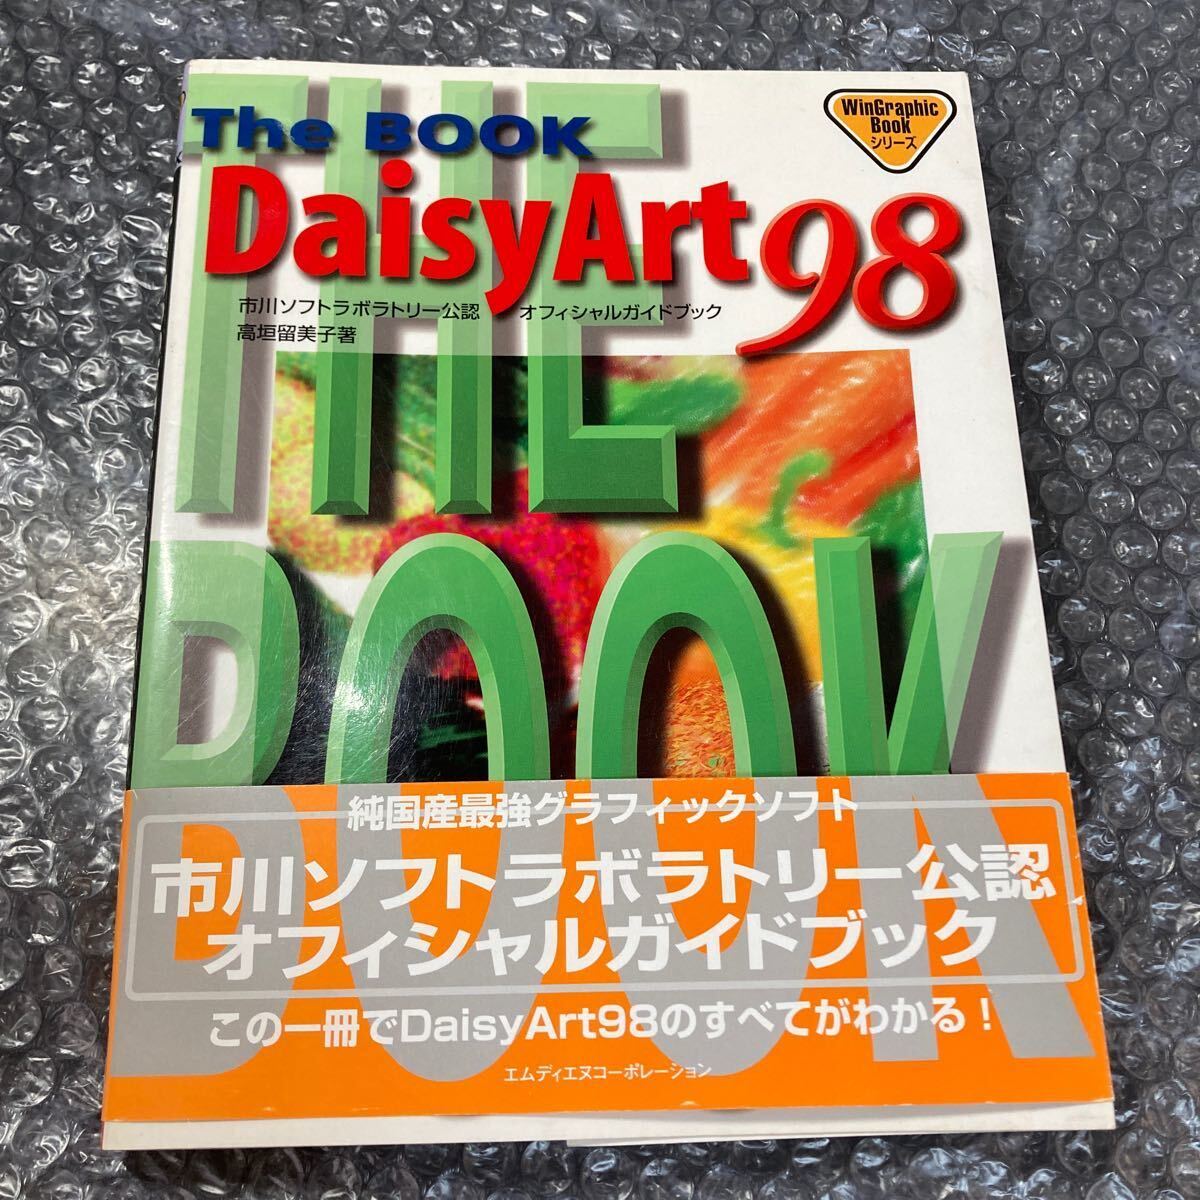  daisy art 98/Daisy Art98 CD-ROM, daisy ko Large .CD-ROM, instructions 3 pcs. + publication The BOOK DaisyArt98 official guidebook 